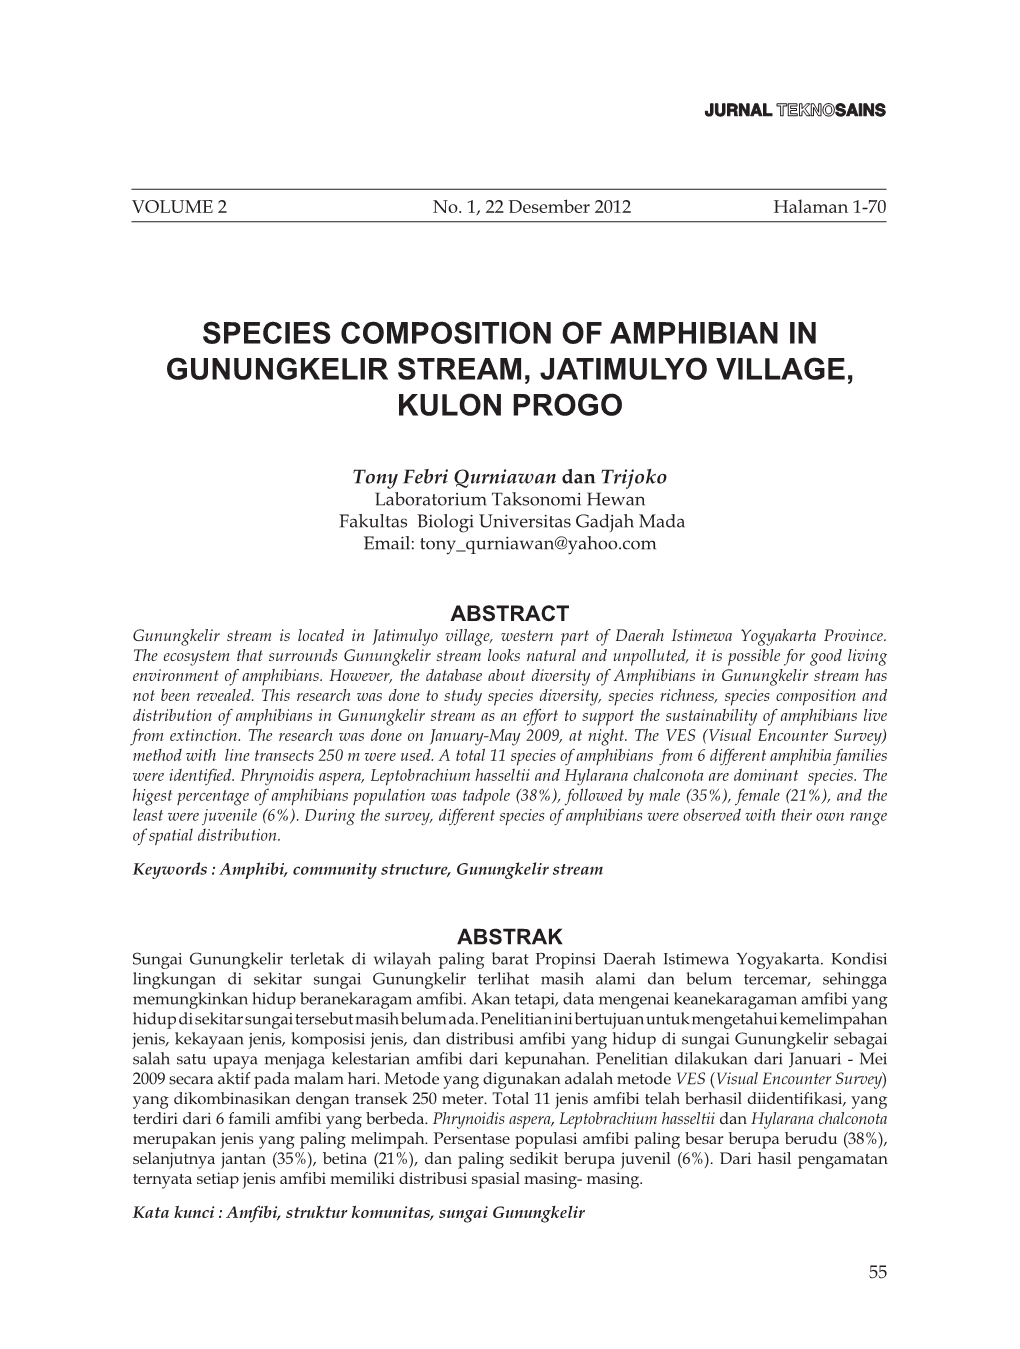 Species Composition of Amphibian in Gunungkelir Stream, Jatimulyo Village, Kulon Progo